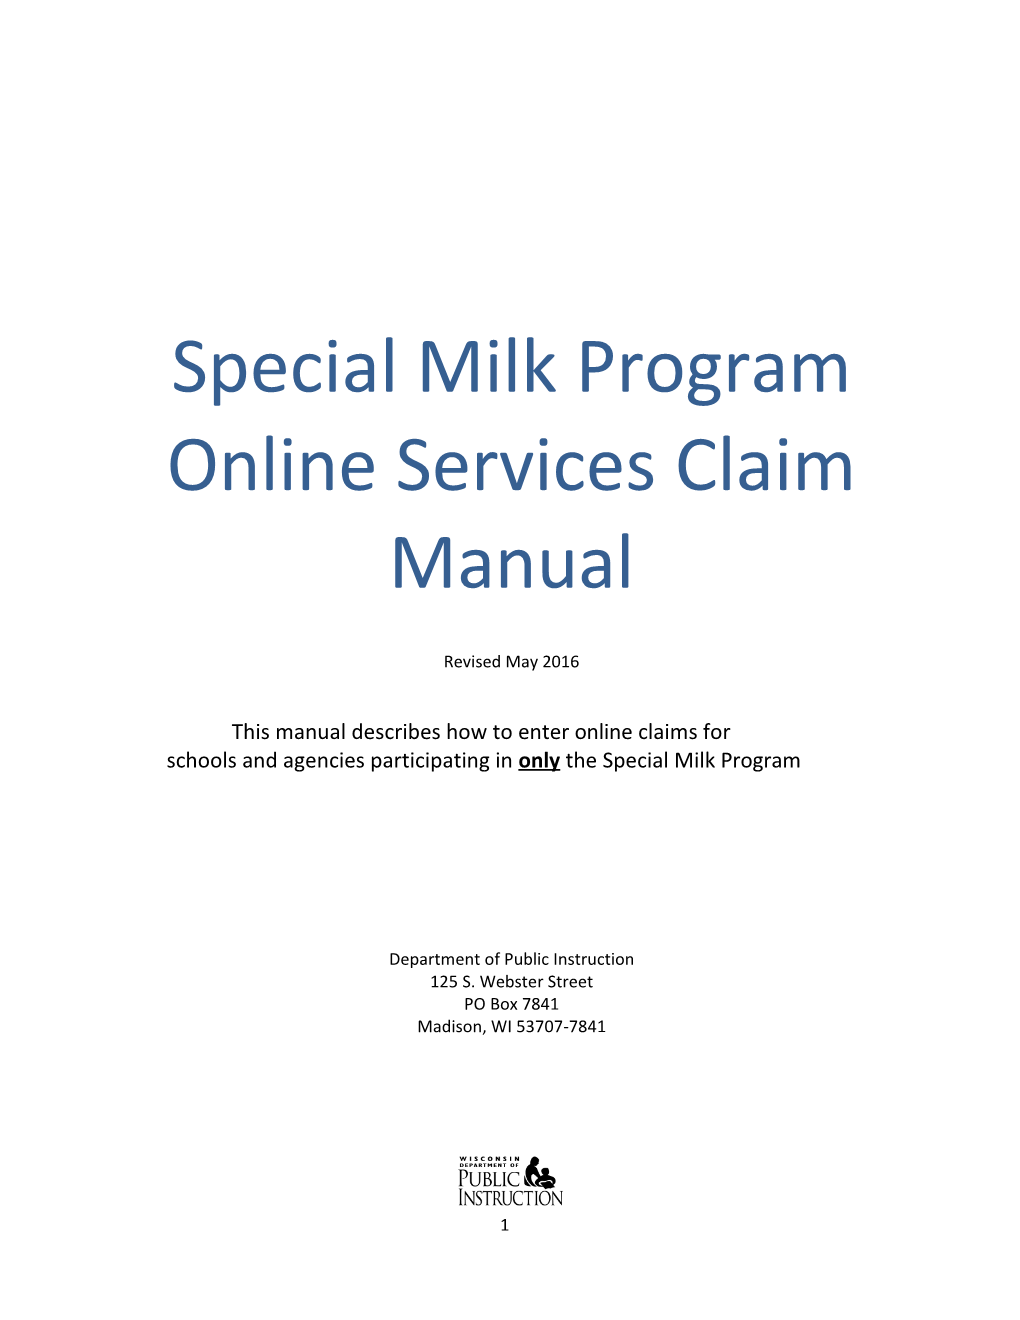 Special Milk Program Claiming Manual